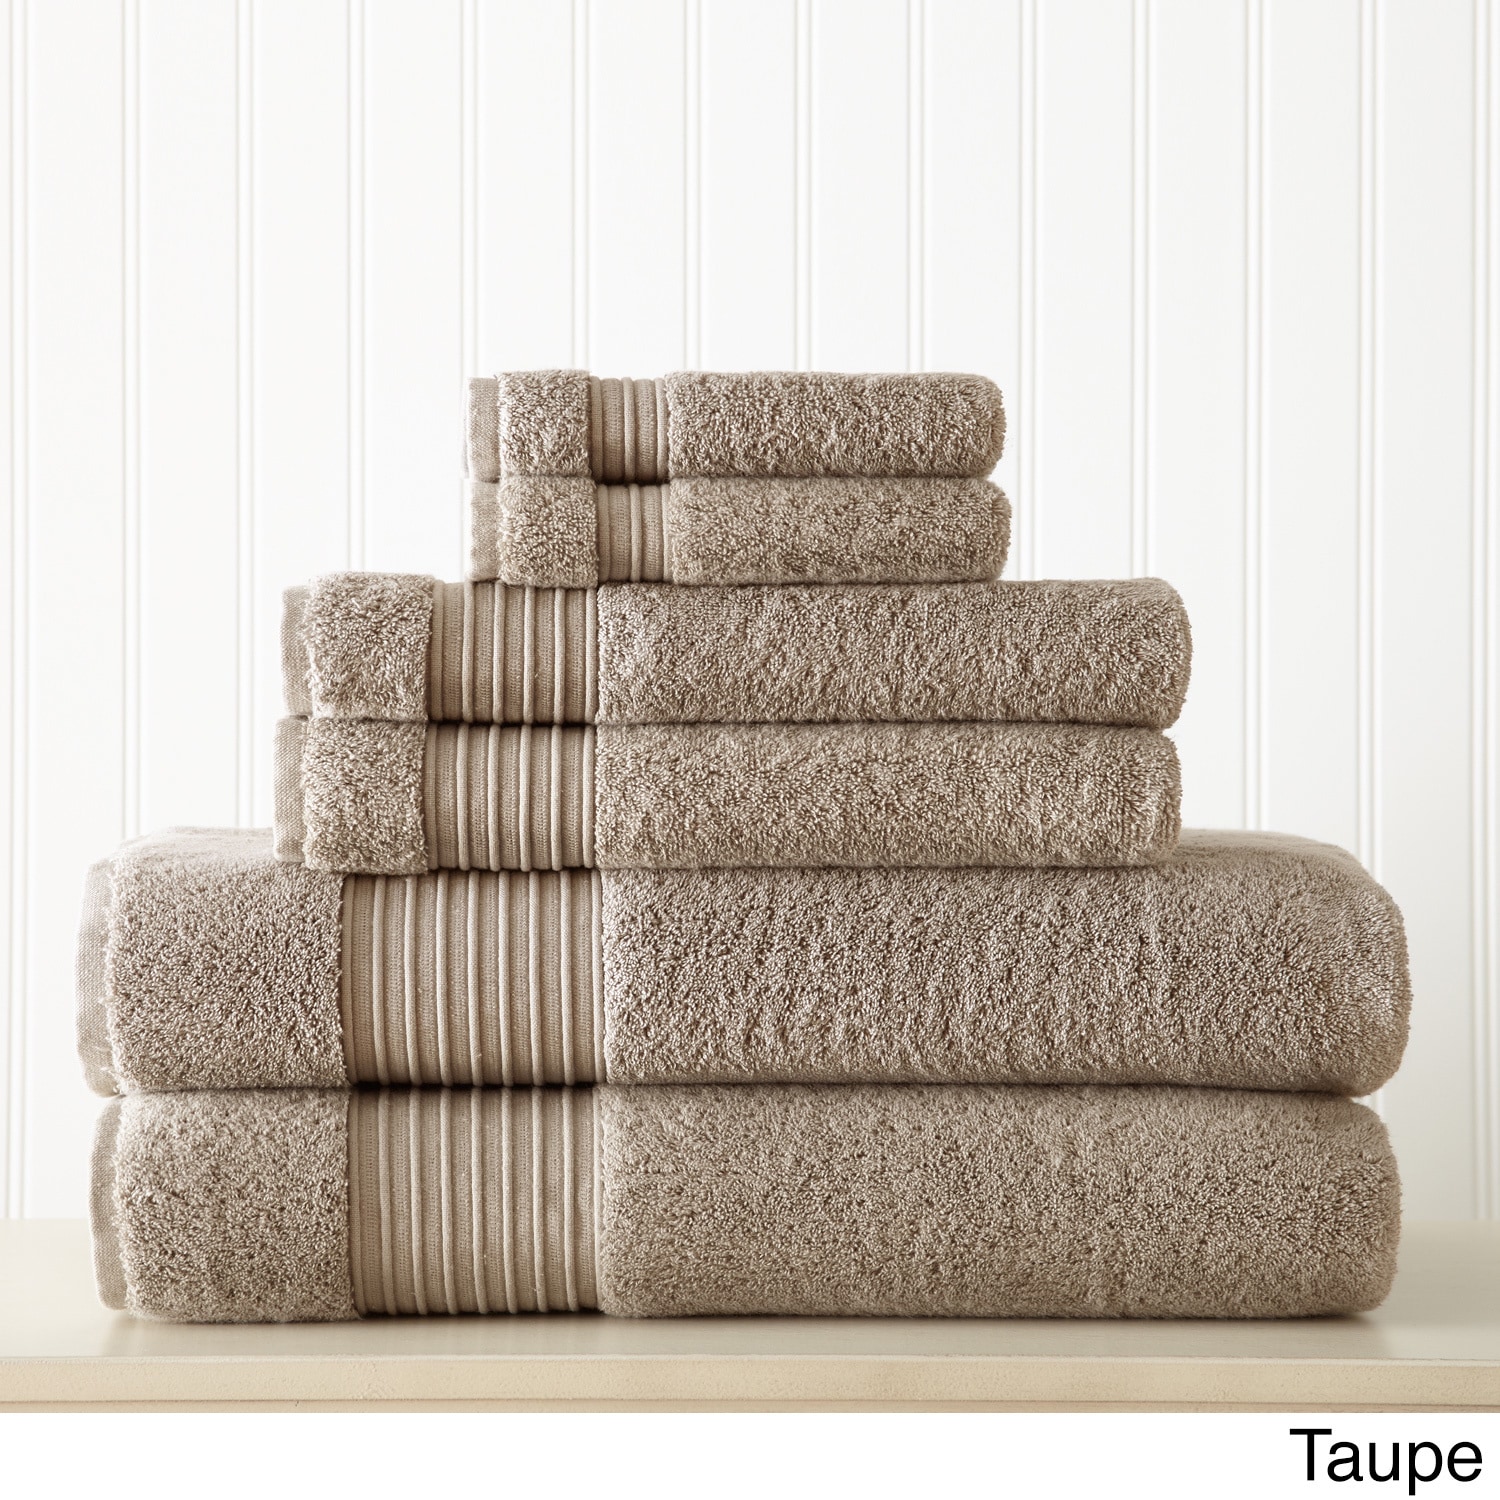 https://ak1.ostkcdn.com/images/products/15200431/Amraupur-Overseas-6-Piece-700GSM-100-Turkish-cotton-towel-set-9b18473d-0fd8-488c-aae7-ea70aac348df.jpg